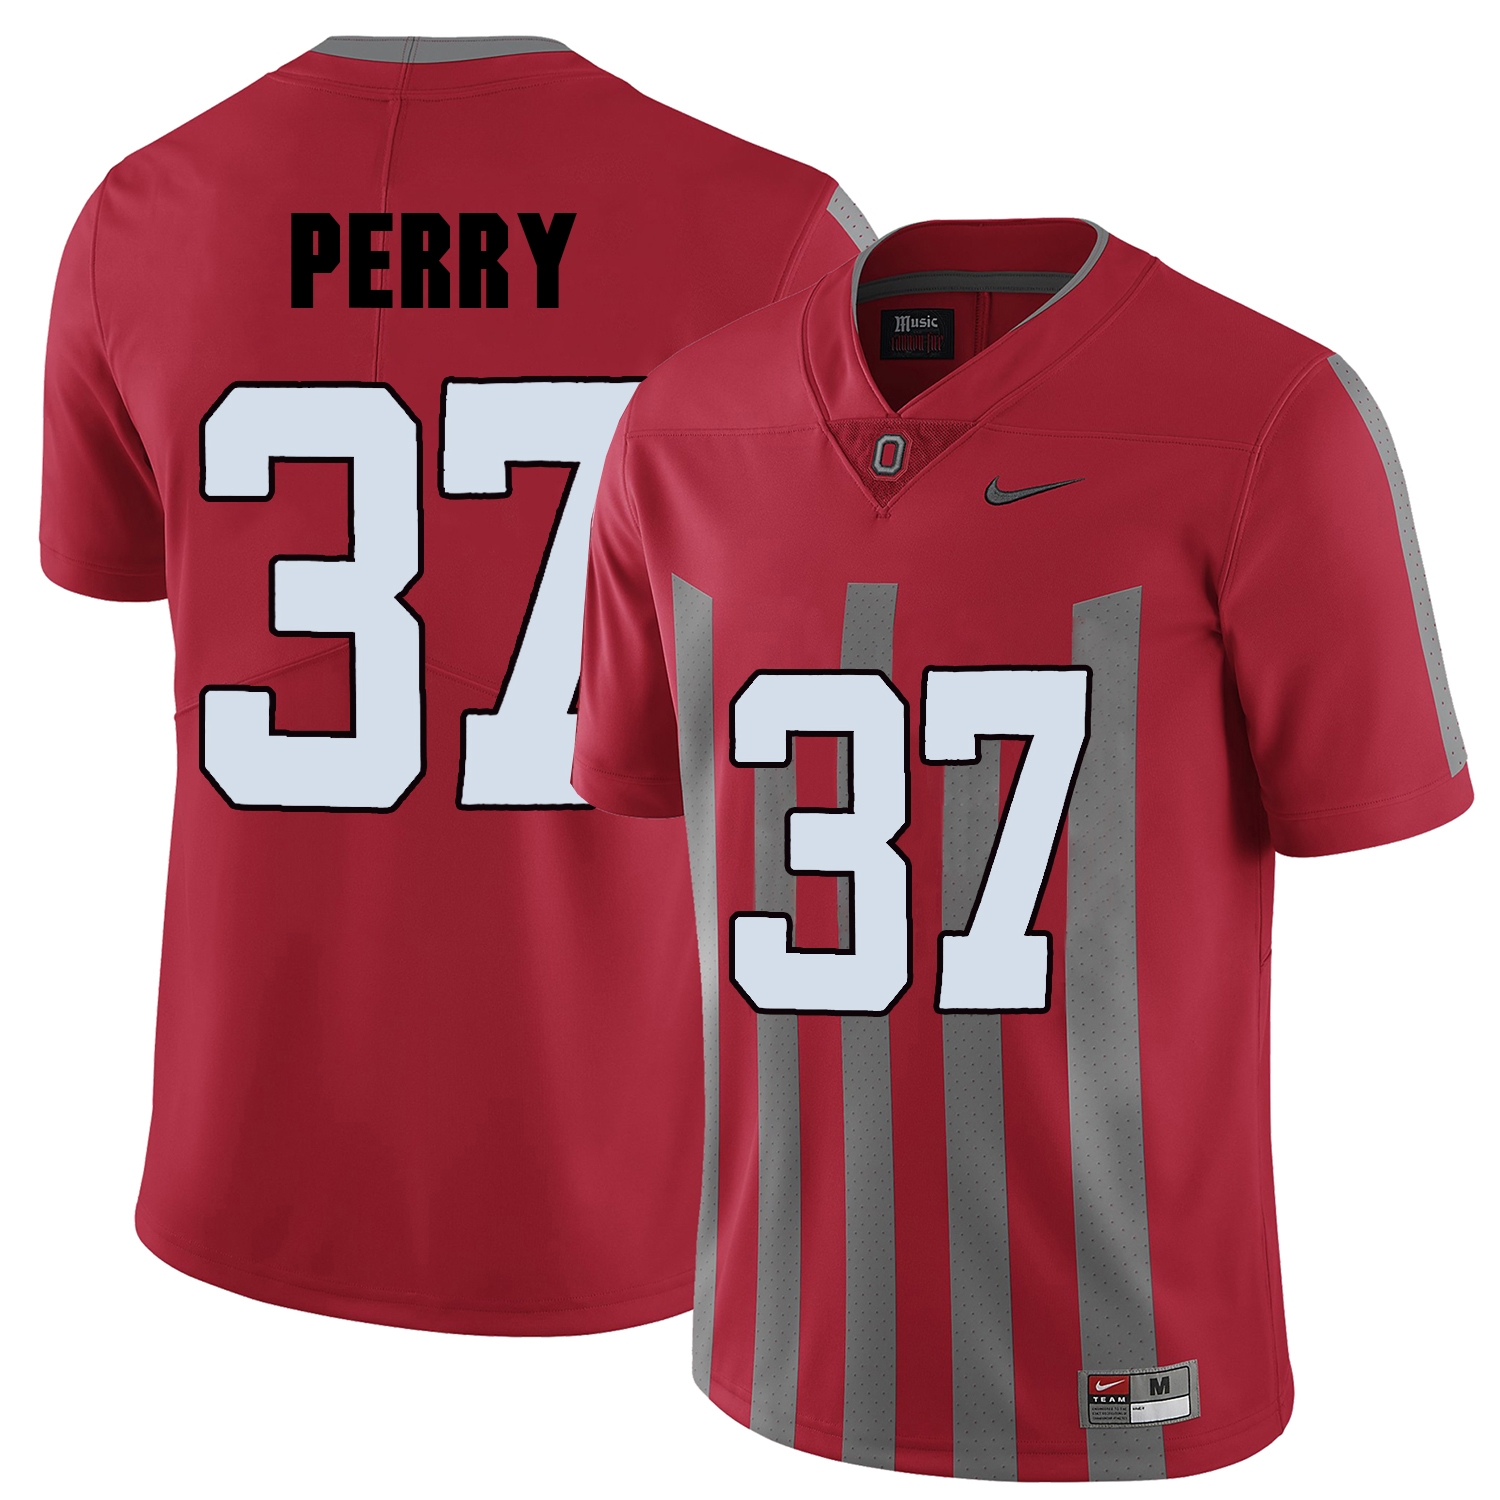 Ohio State Buckeyes Men's NCAA Joshua Perry #37 Red Elite College Football Jersey VWN8749WB